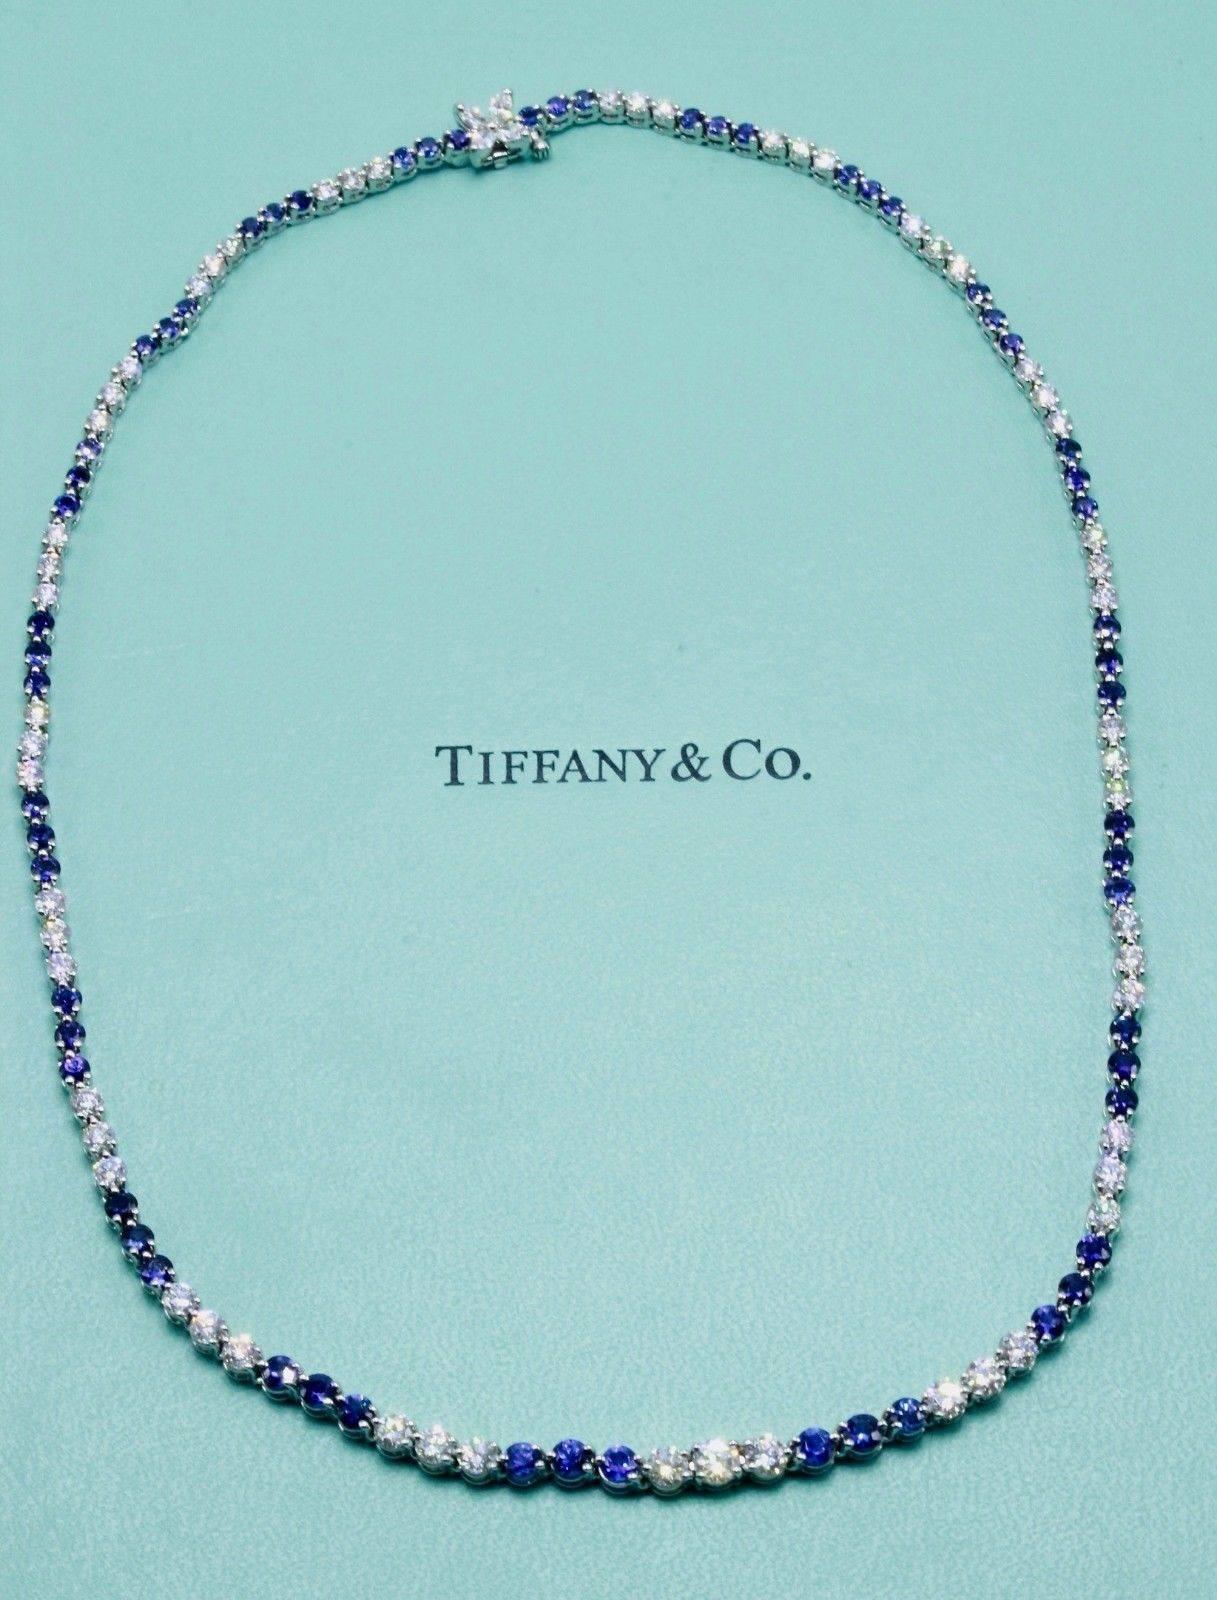 Tiffany & Co. 
Victoria Diamond & Sapphire Necklace in Platinum.  
Necklace consists of 57 Round Brilliant Diamonds 4.54 TCW G - I color, VVS1 - VS1 clarity, 60 Round Blue Sapphires 6.90 TCW VVS - VS clarity, and 4 Marquise Cut Diamonds 0.24 TCW G